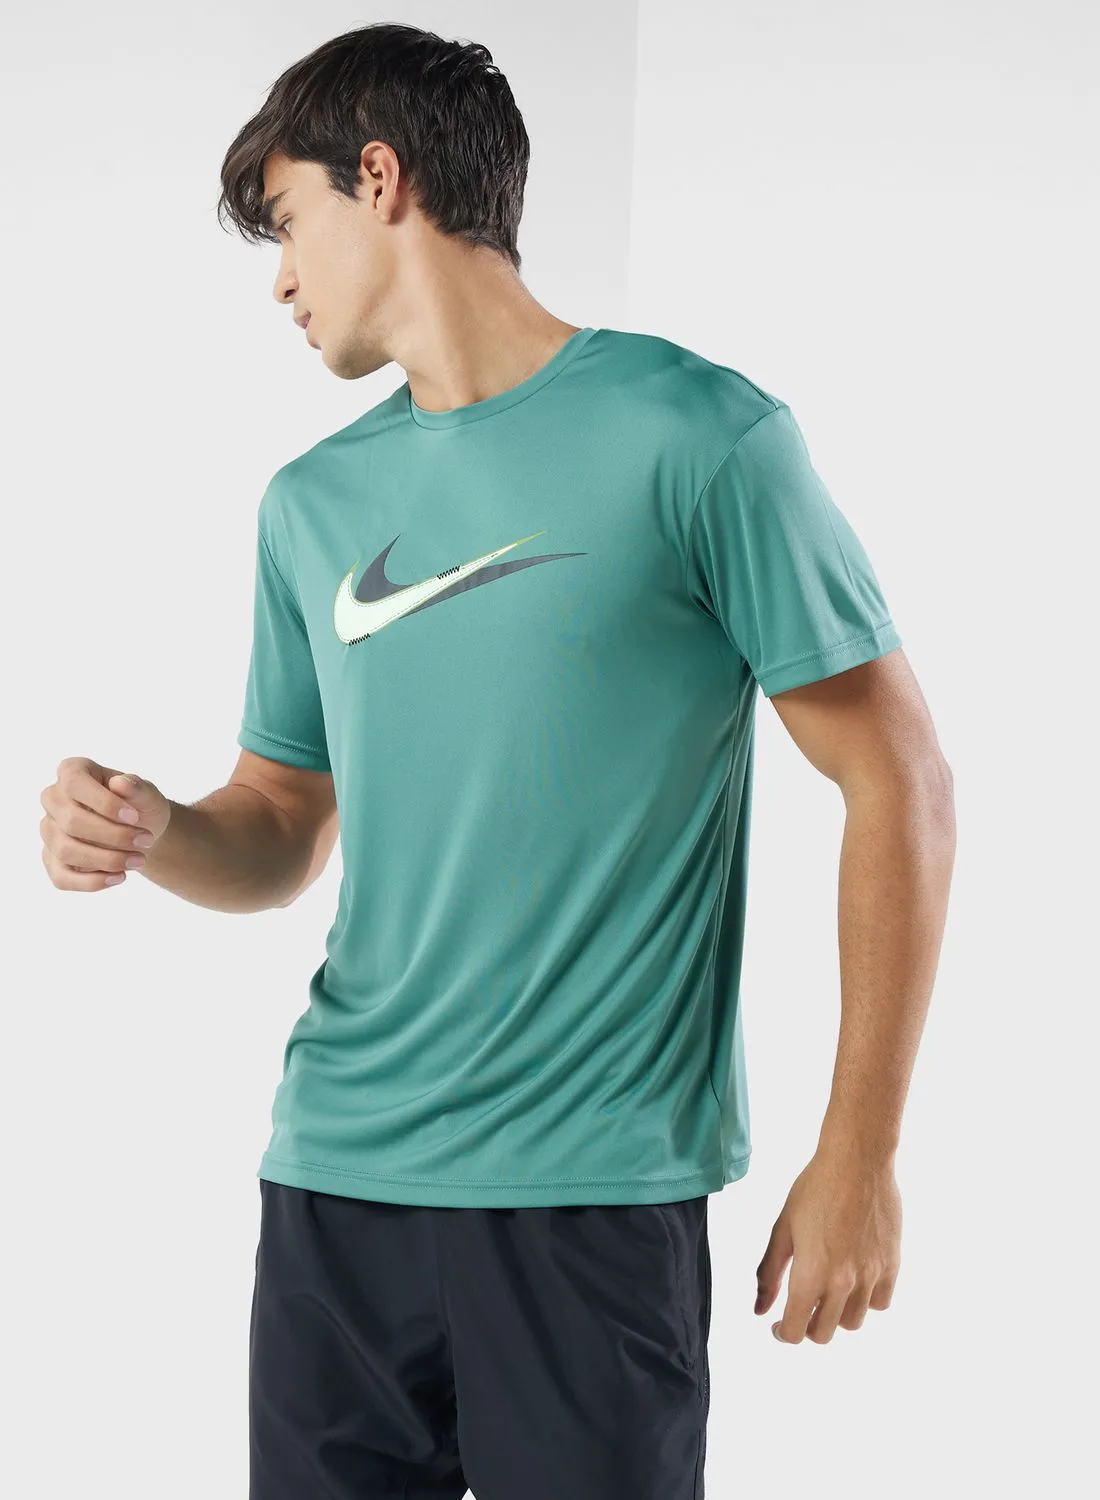 Nike Rashguard Swim Shirt